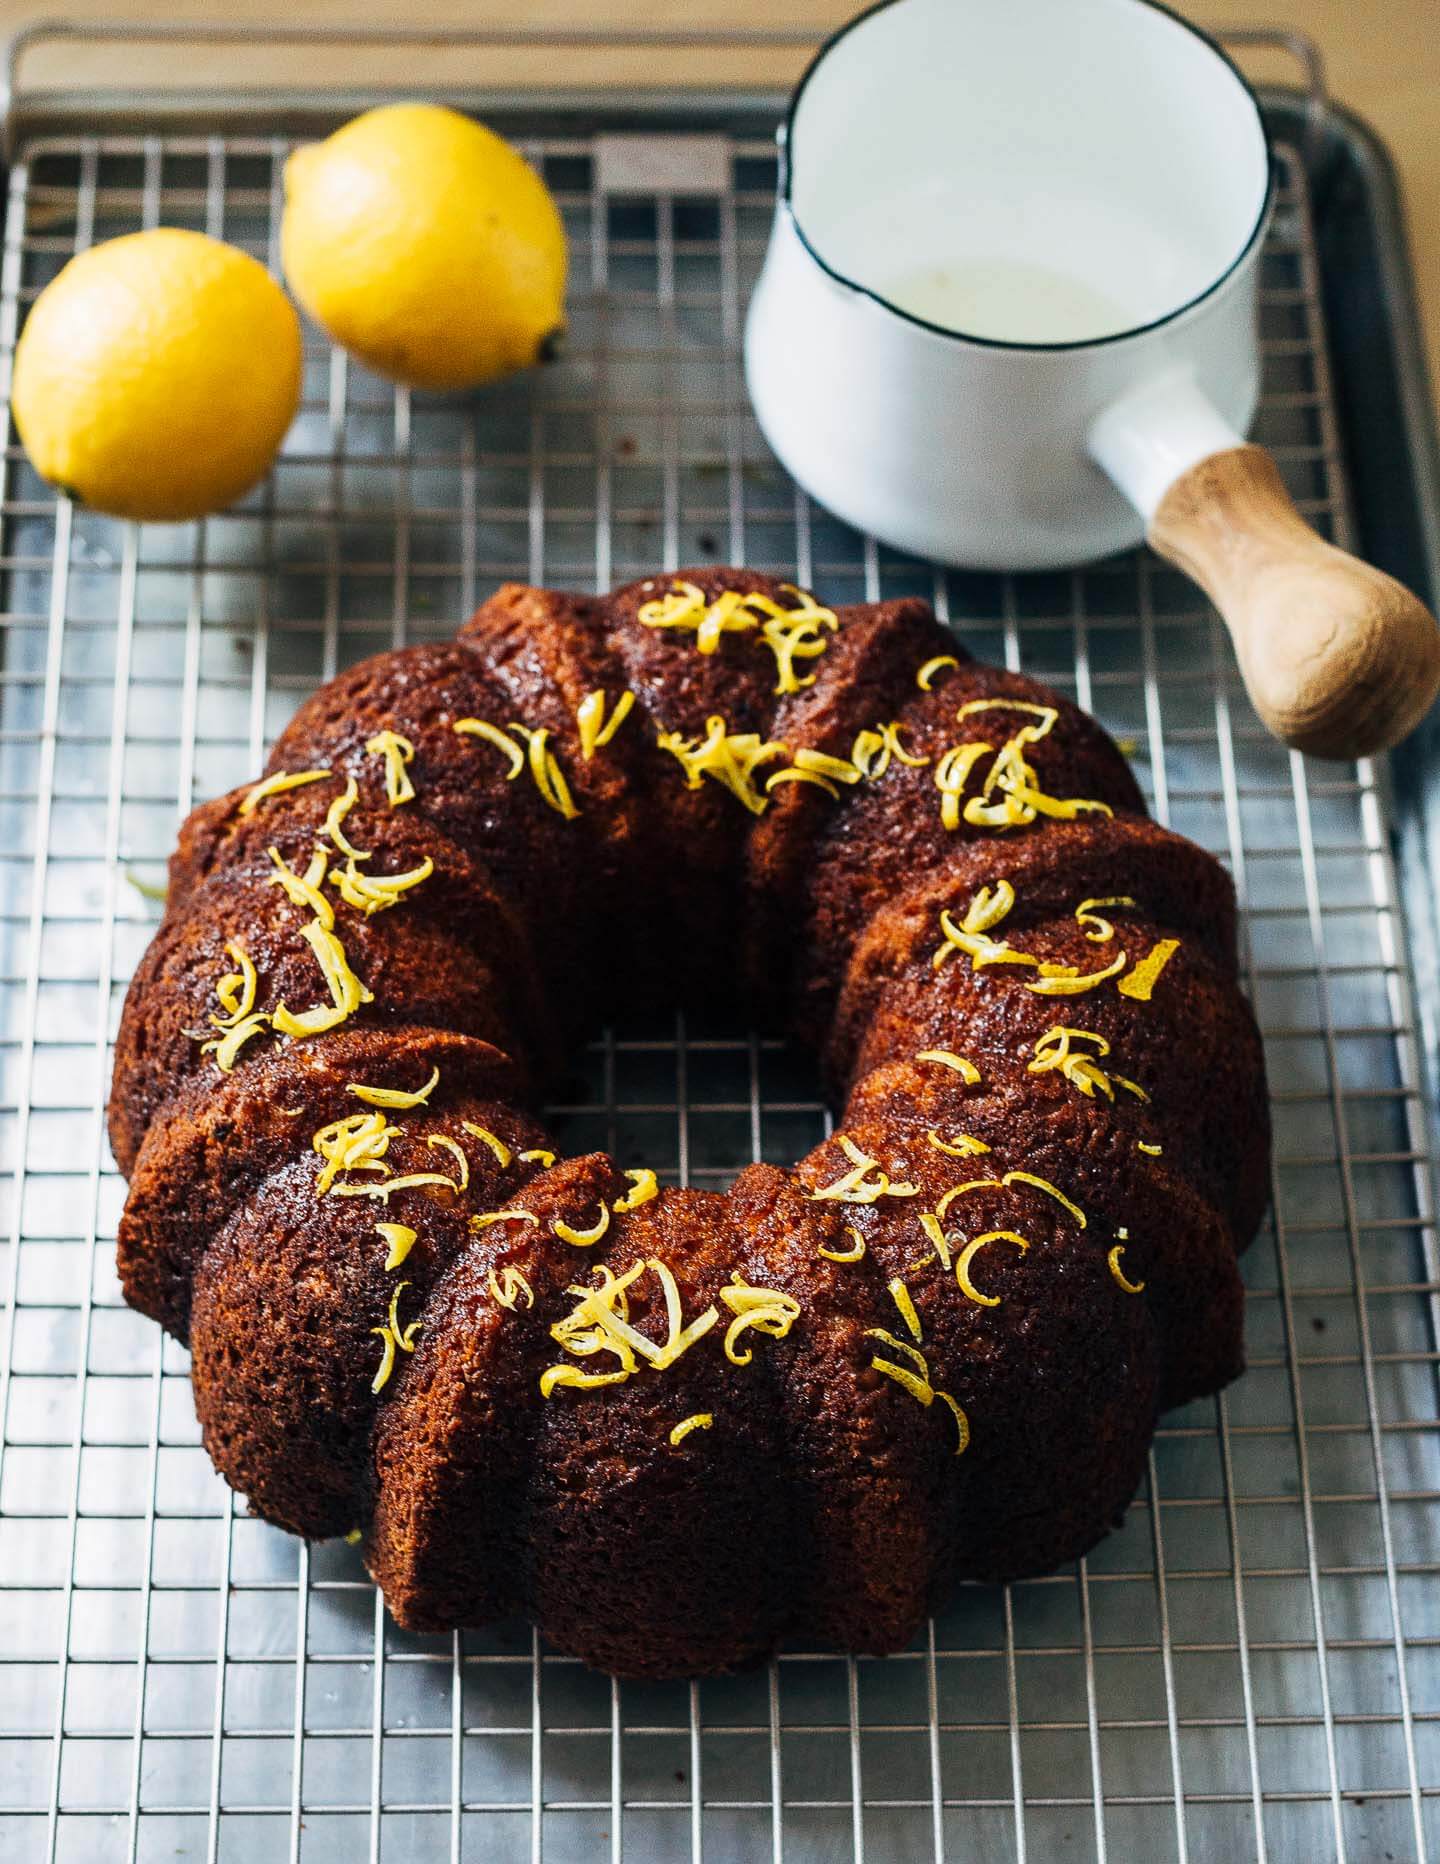 Spelt flour and olive oil lemon bundt cake, just topped with a lemon-sugar glaze.